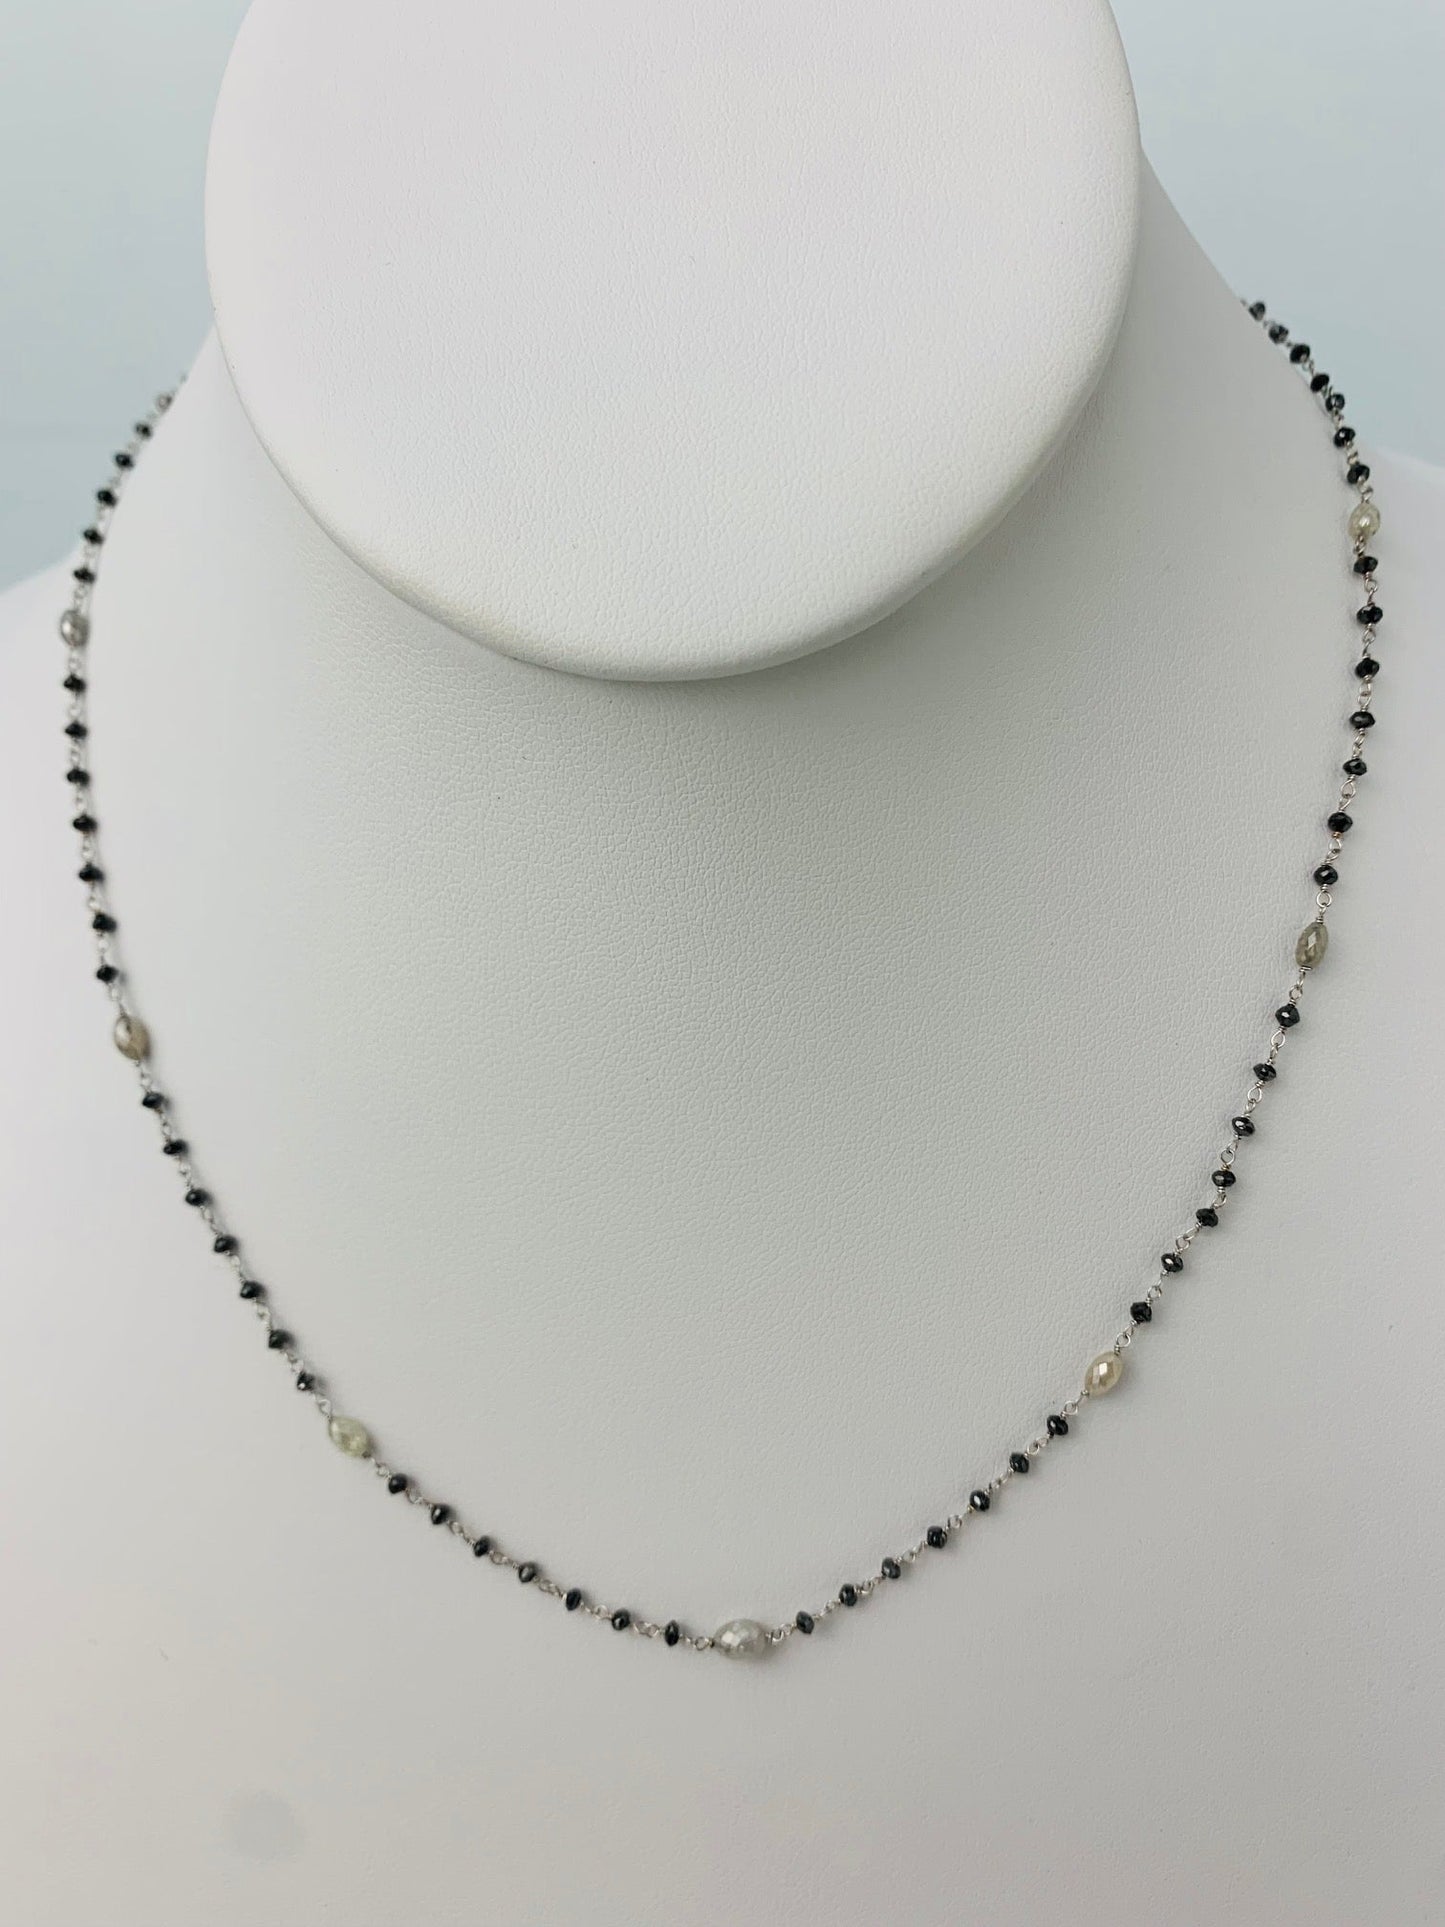 18" Black Diamond Rosary Necklace With Grey Diamond Accents in 14KW - NCK-259-ROSDIA14W-GRYBK-18 5.8ctw